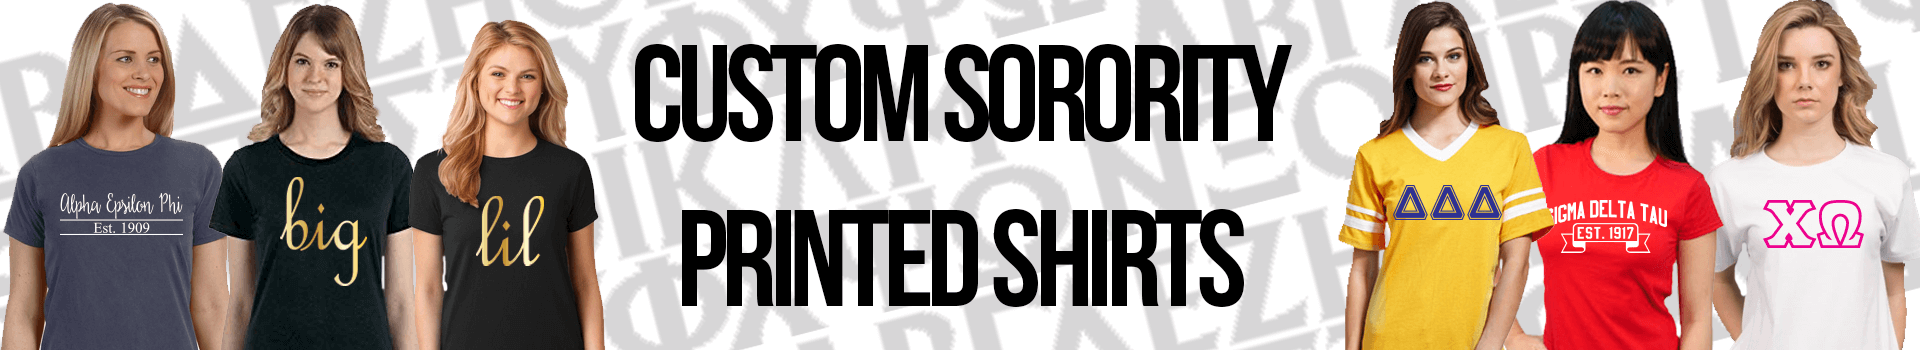 Custom Sorority Printed Shirts